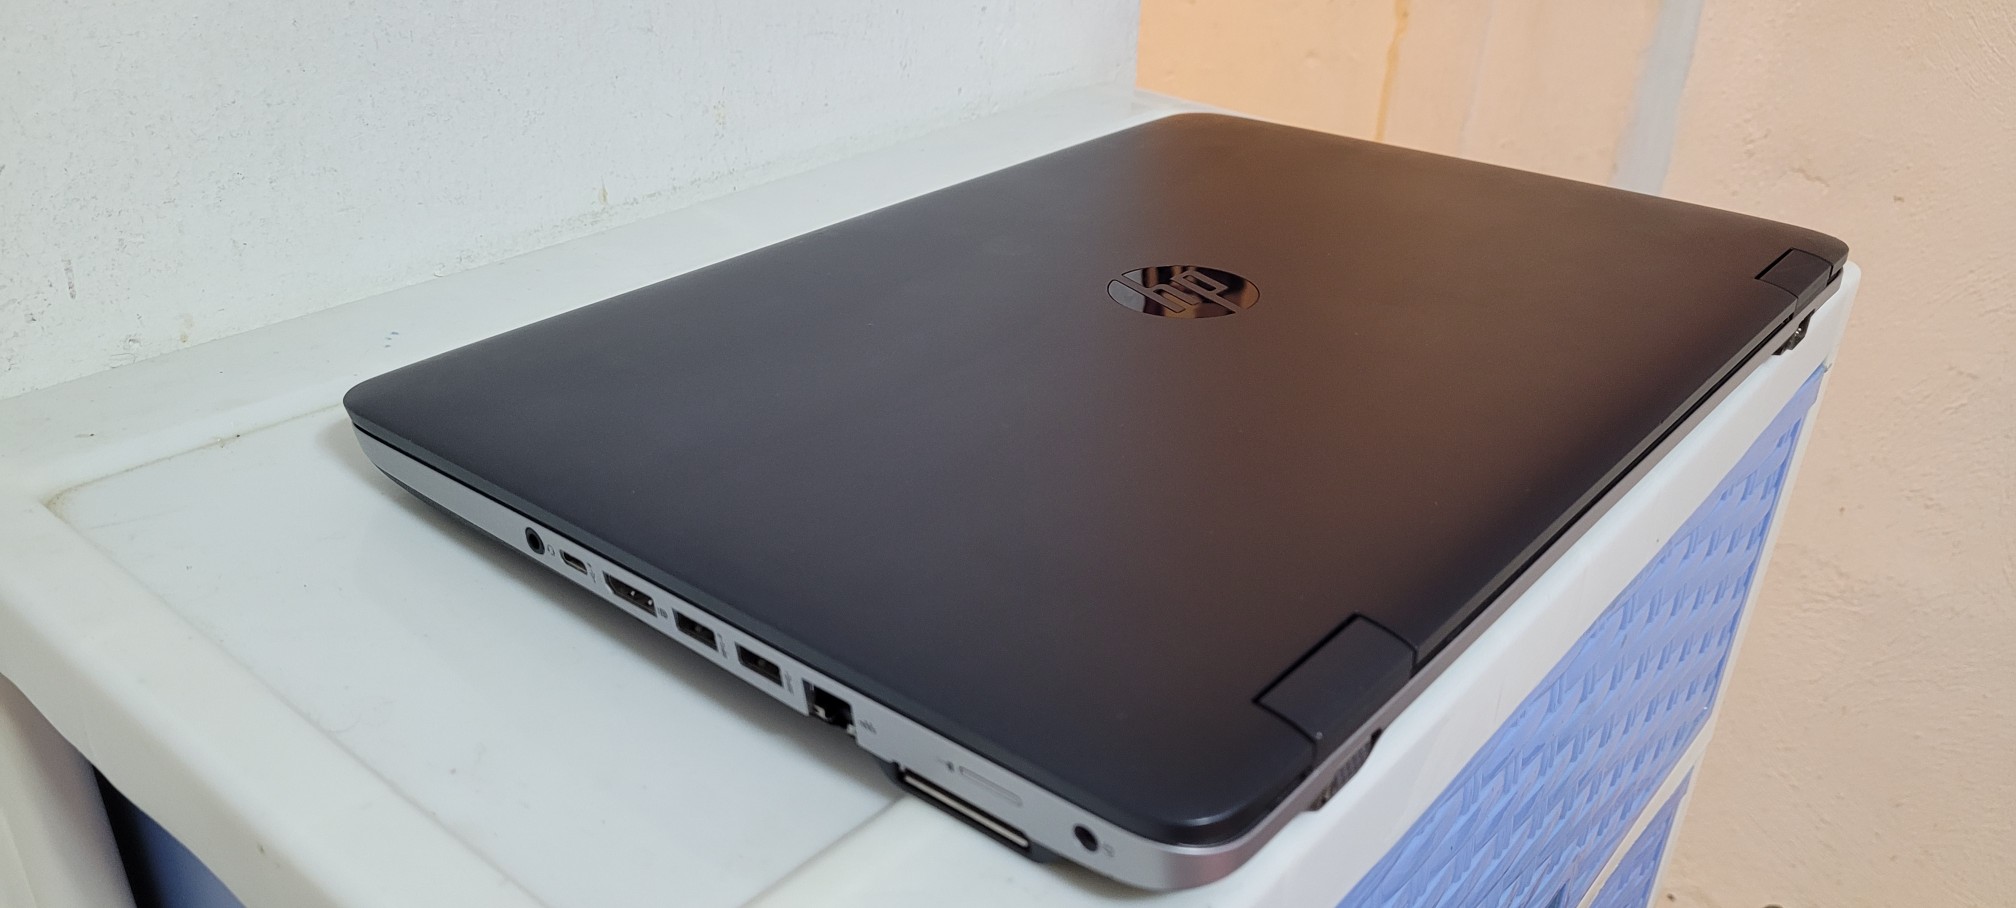 computadoras y laptops - Laptop hp G2 17 Pulg Core i5 6ta Gen Ram 16b ddr4 Disco 256gb SSD Video 8gb 2